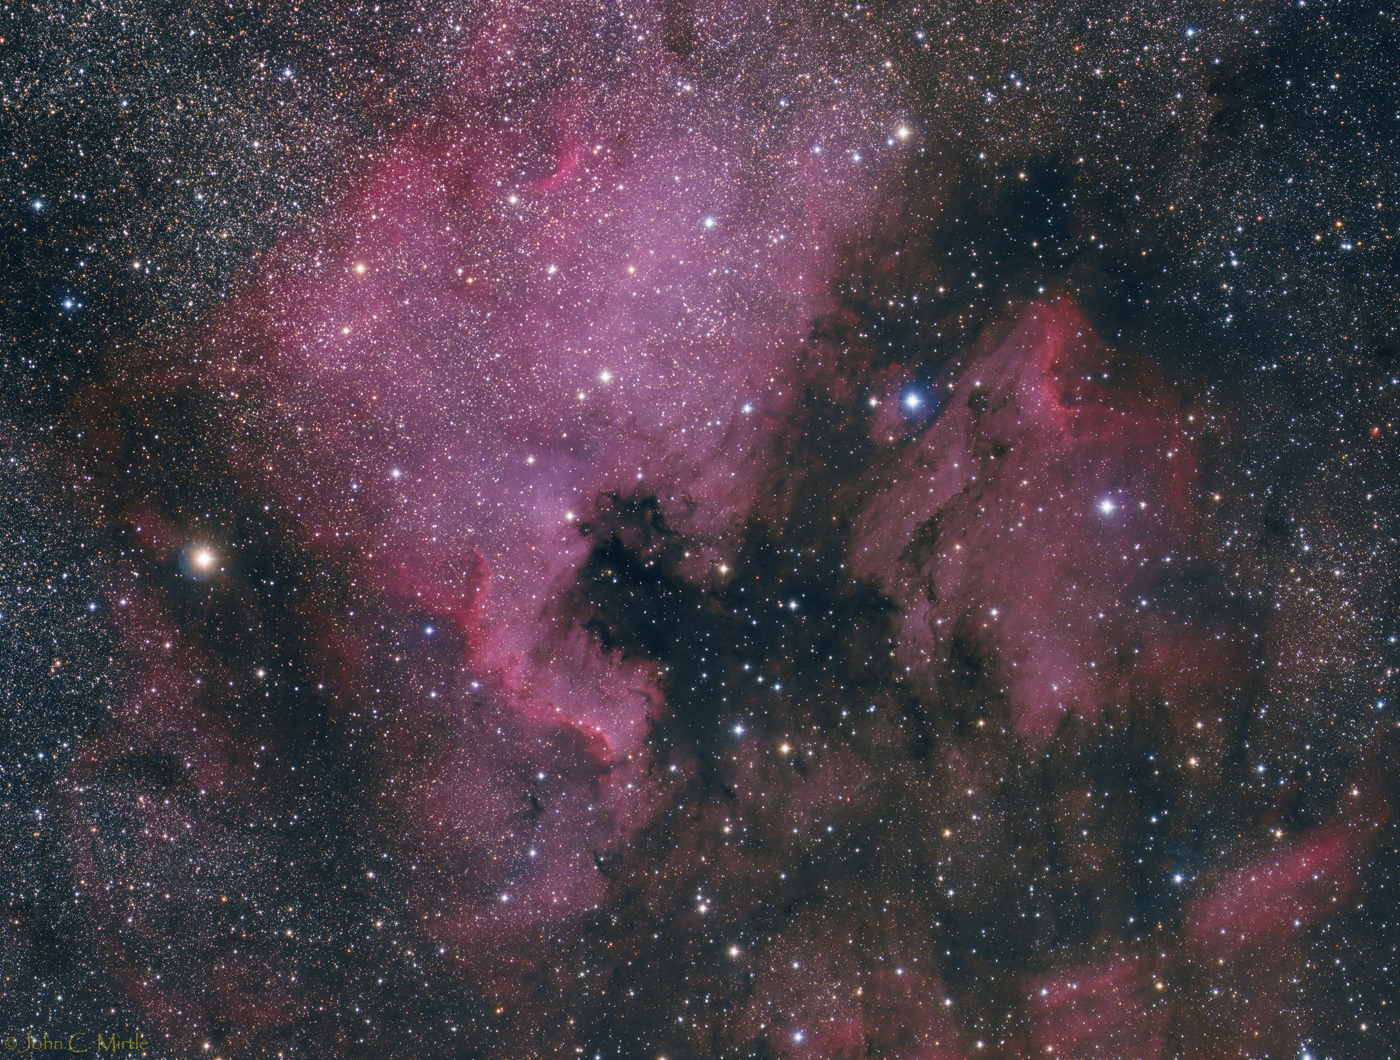 Emission Nebula in Cygnus